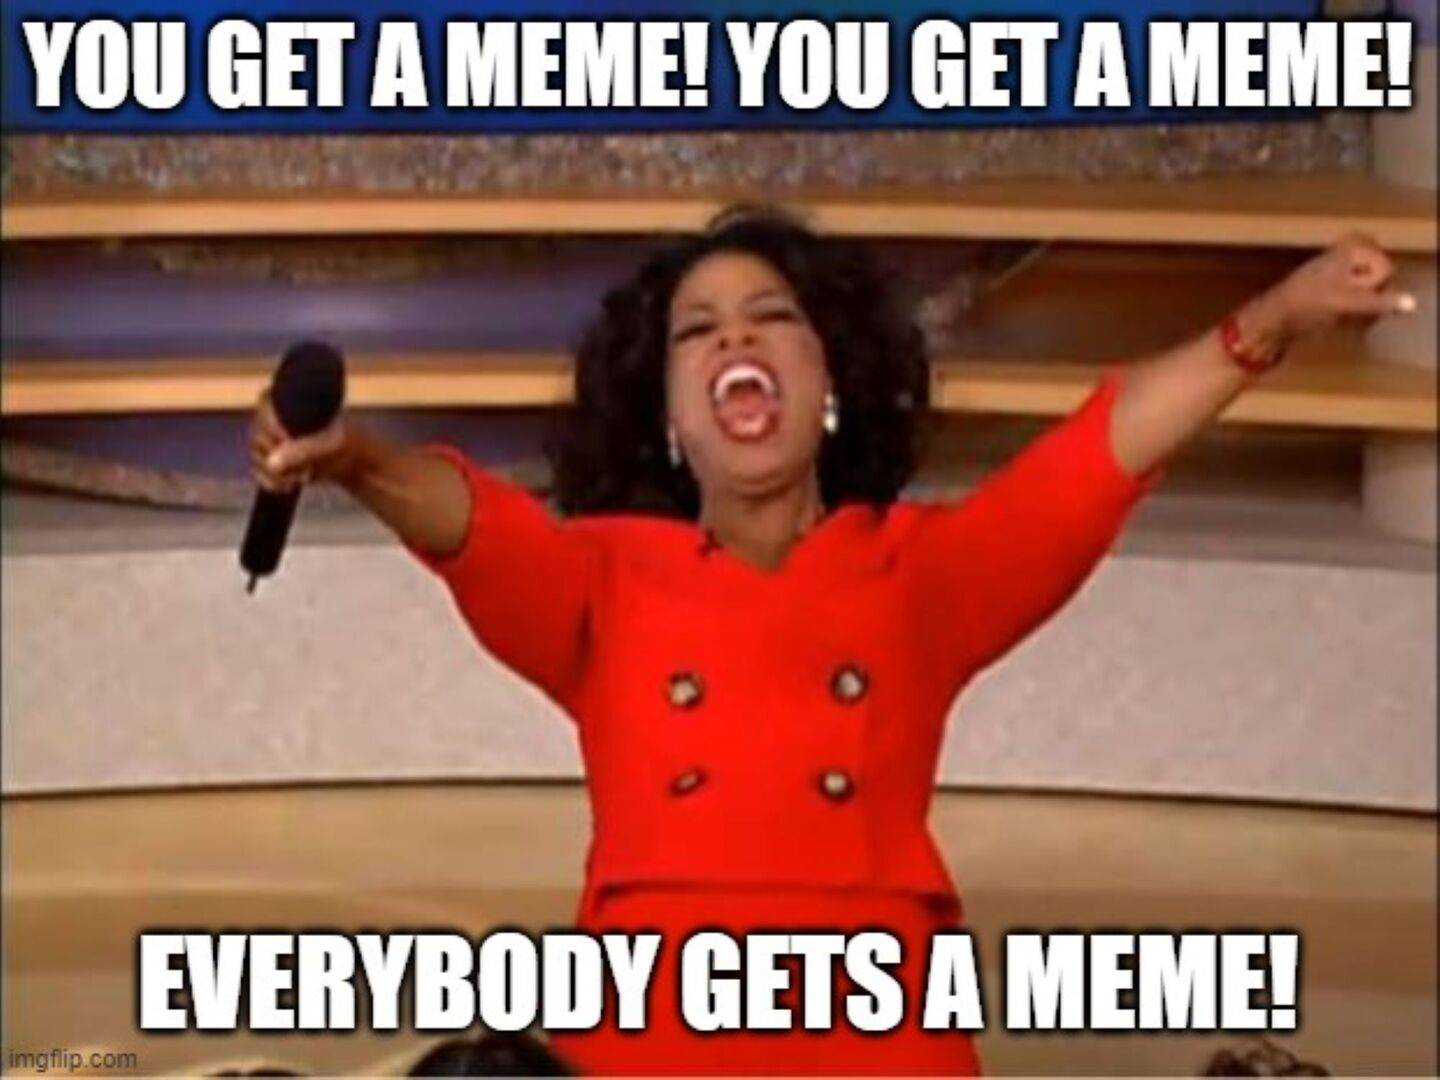 Oprah Winfrey meme, using memes in marketing